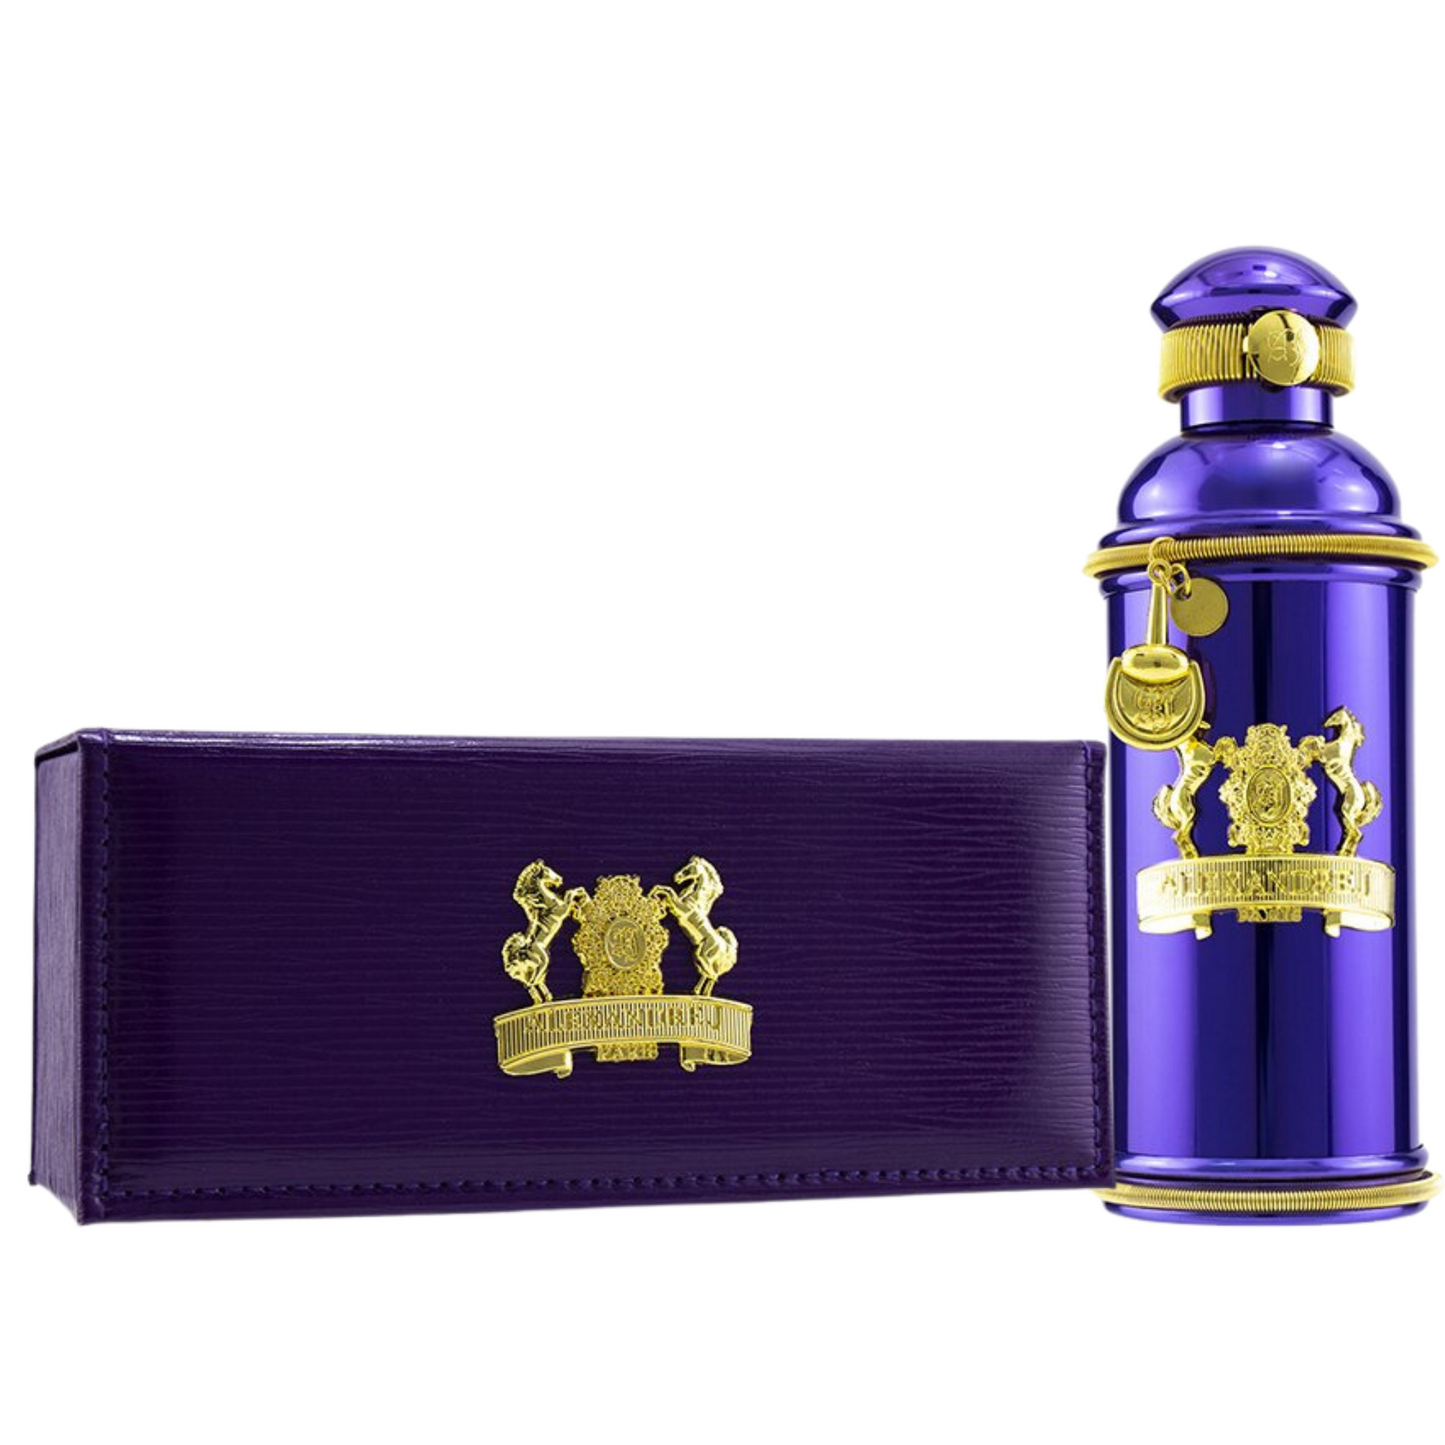 Perfume para Mujer ALEXANDRE.J THE COLLECTOR IRIS VIOLET 100ml EDP